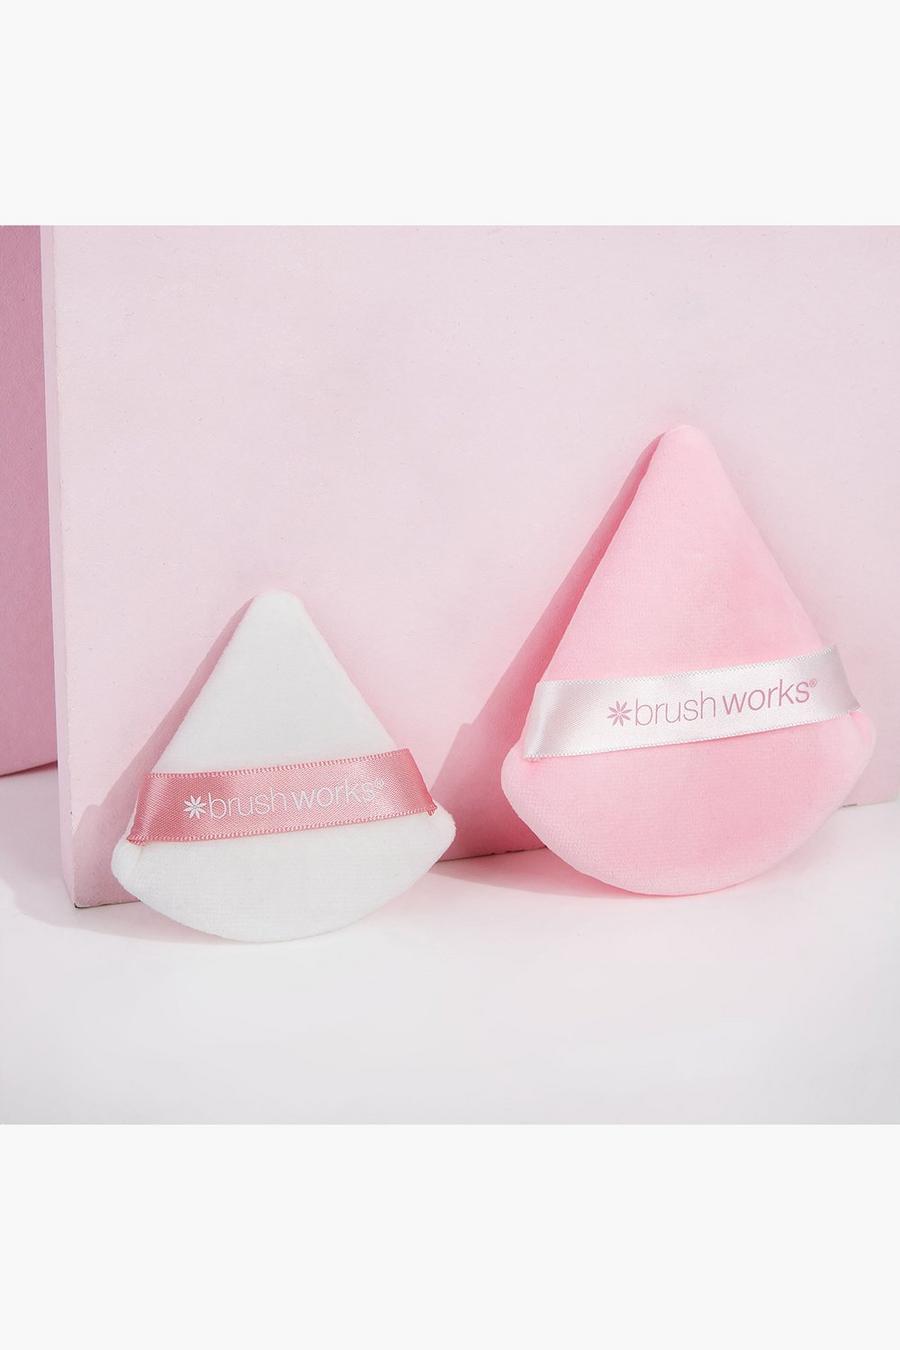 Pink rosa Brushworks Triangular Powder Puff Duo